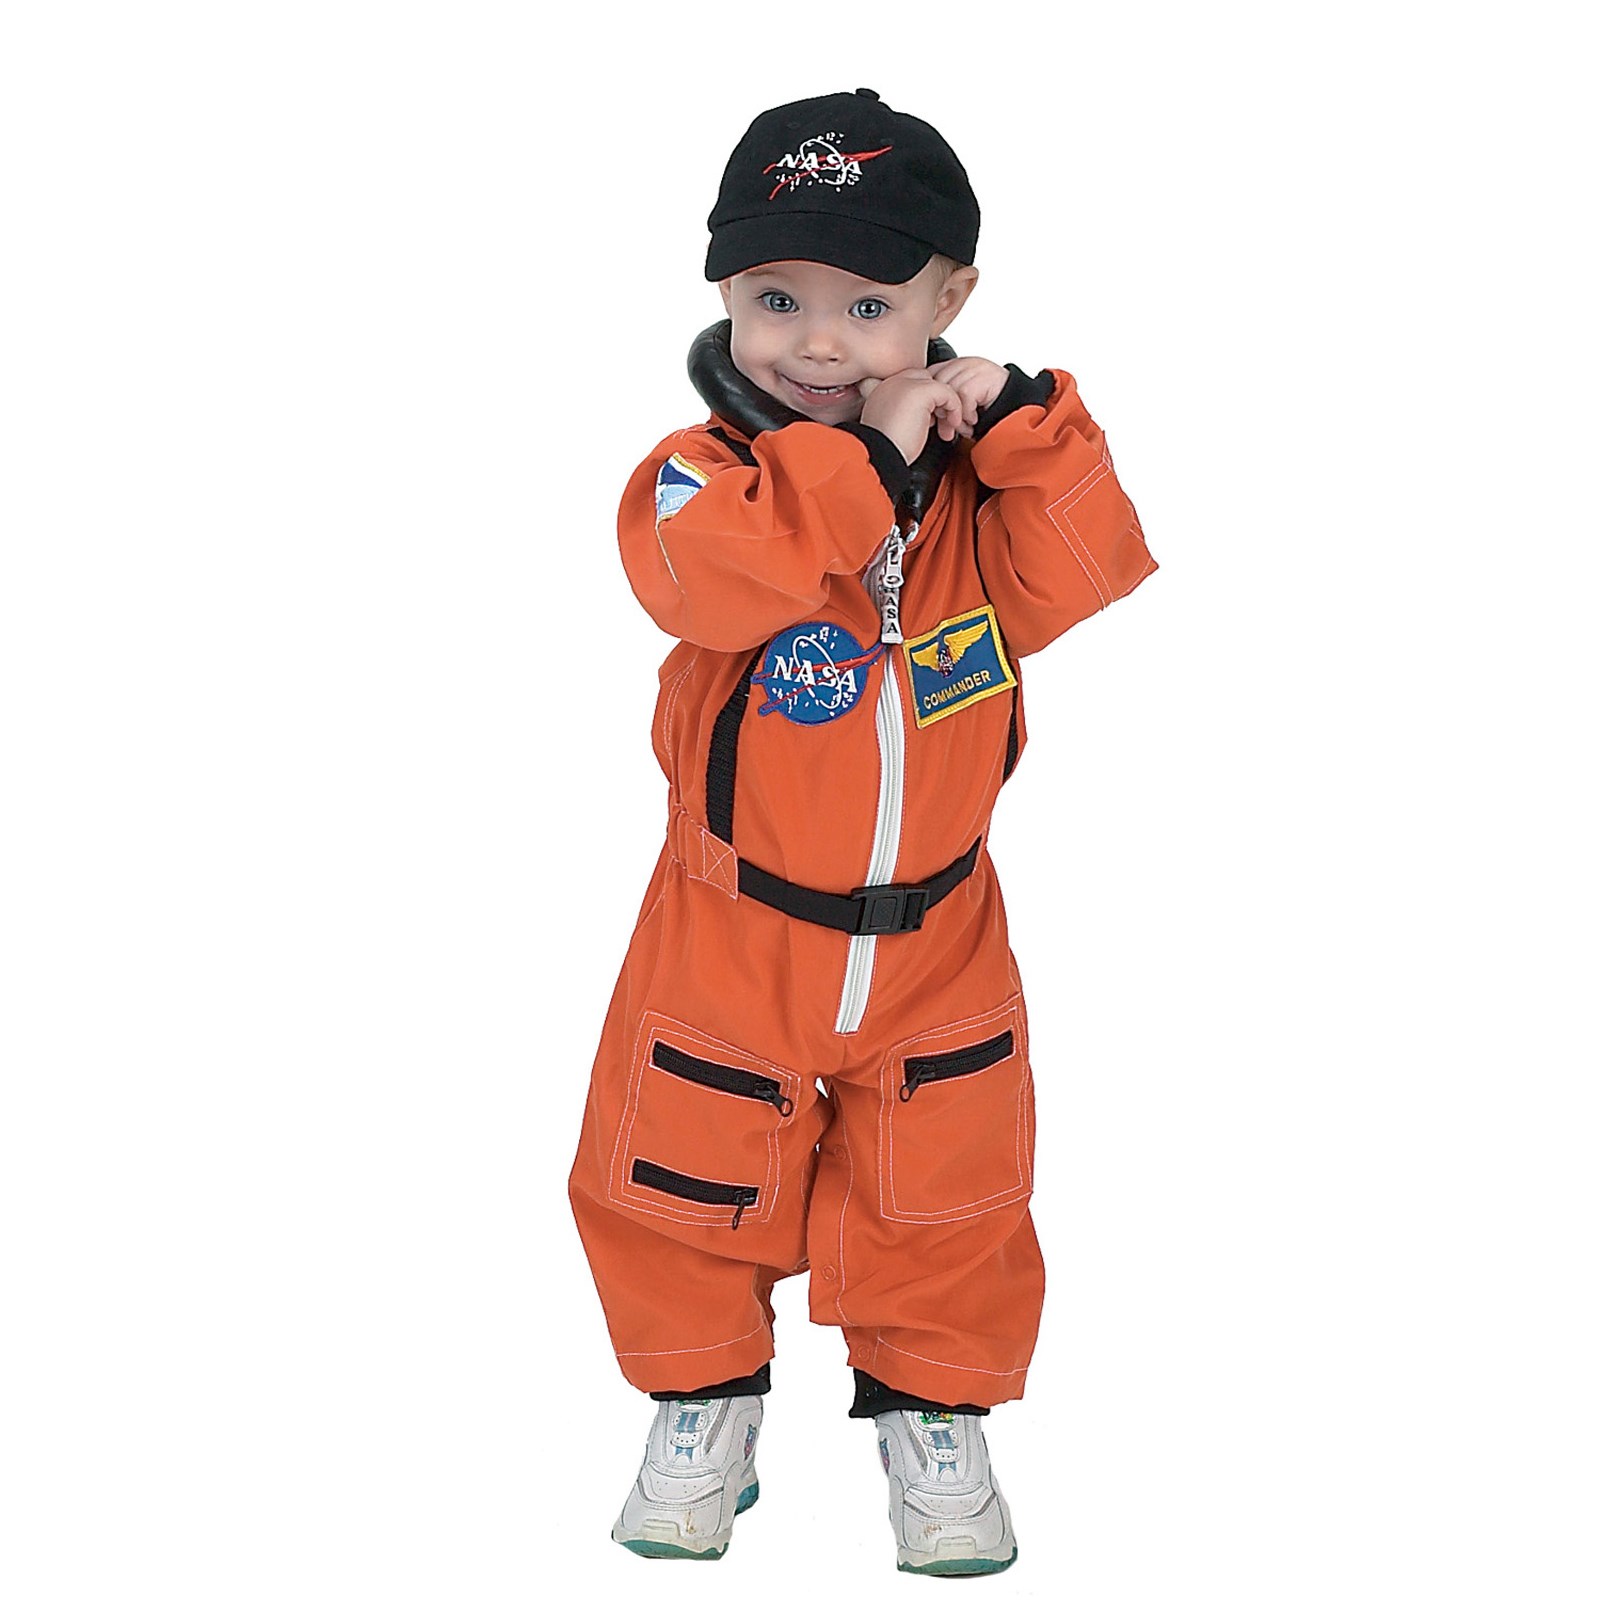 NASA Jr. Astronaut Suit Orange Toddler Costume